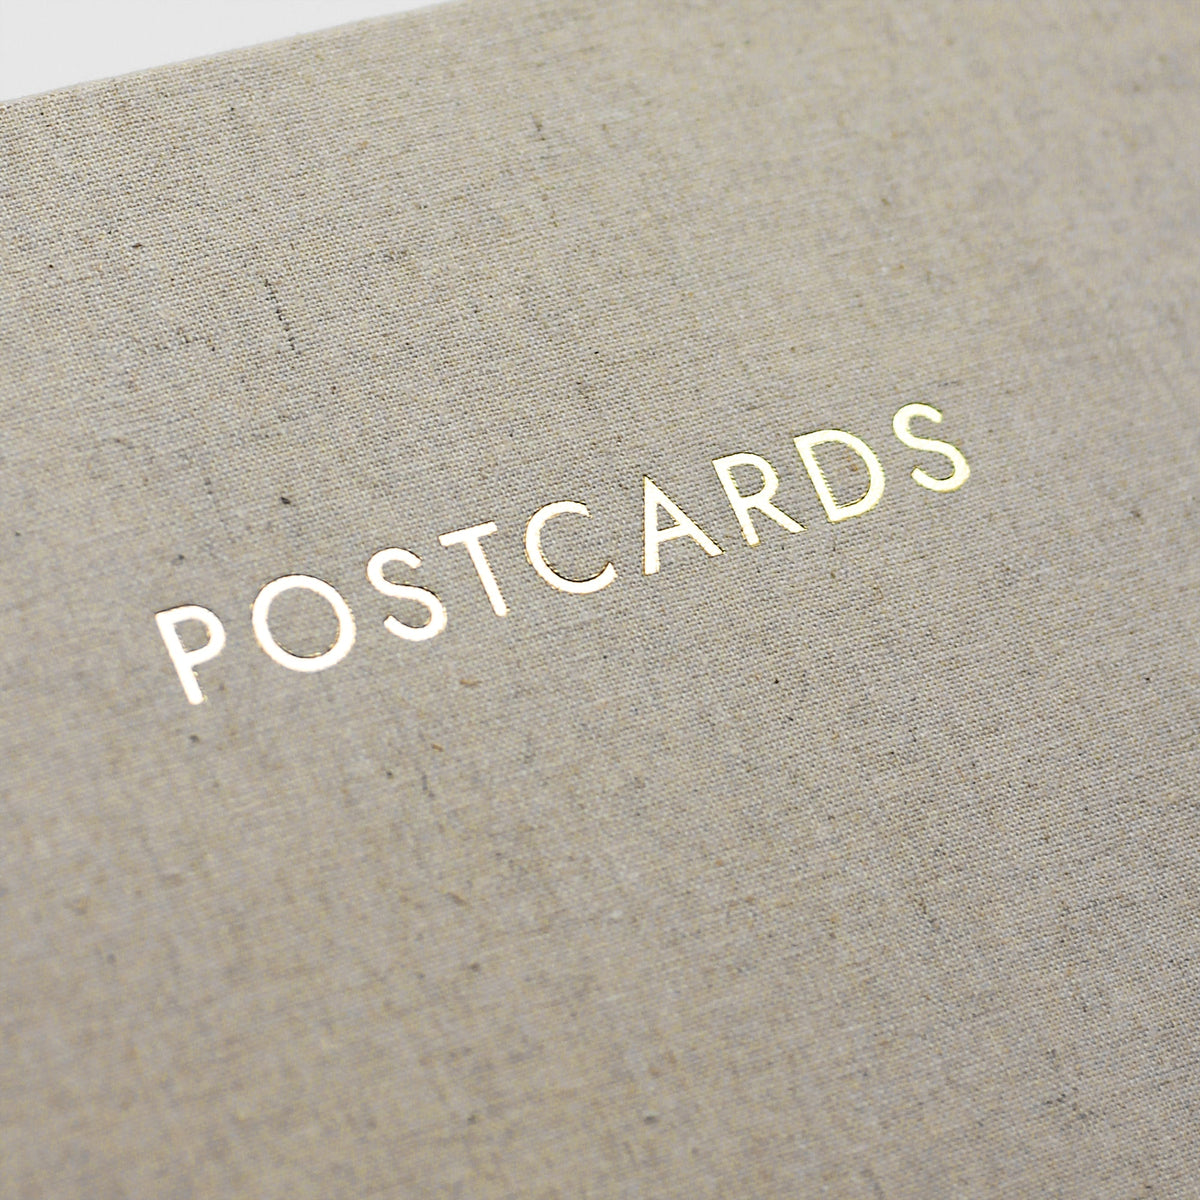 Large Postcard Album Sleeves (for 4x6 Postcards) Set Of 10 - Rag & Bone  Bindery